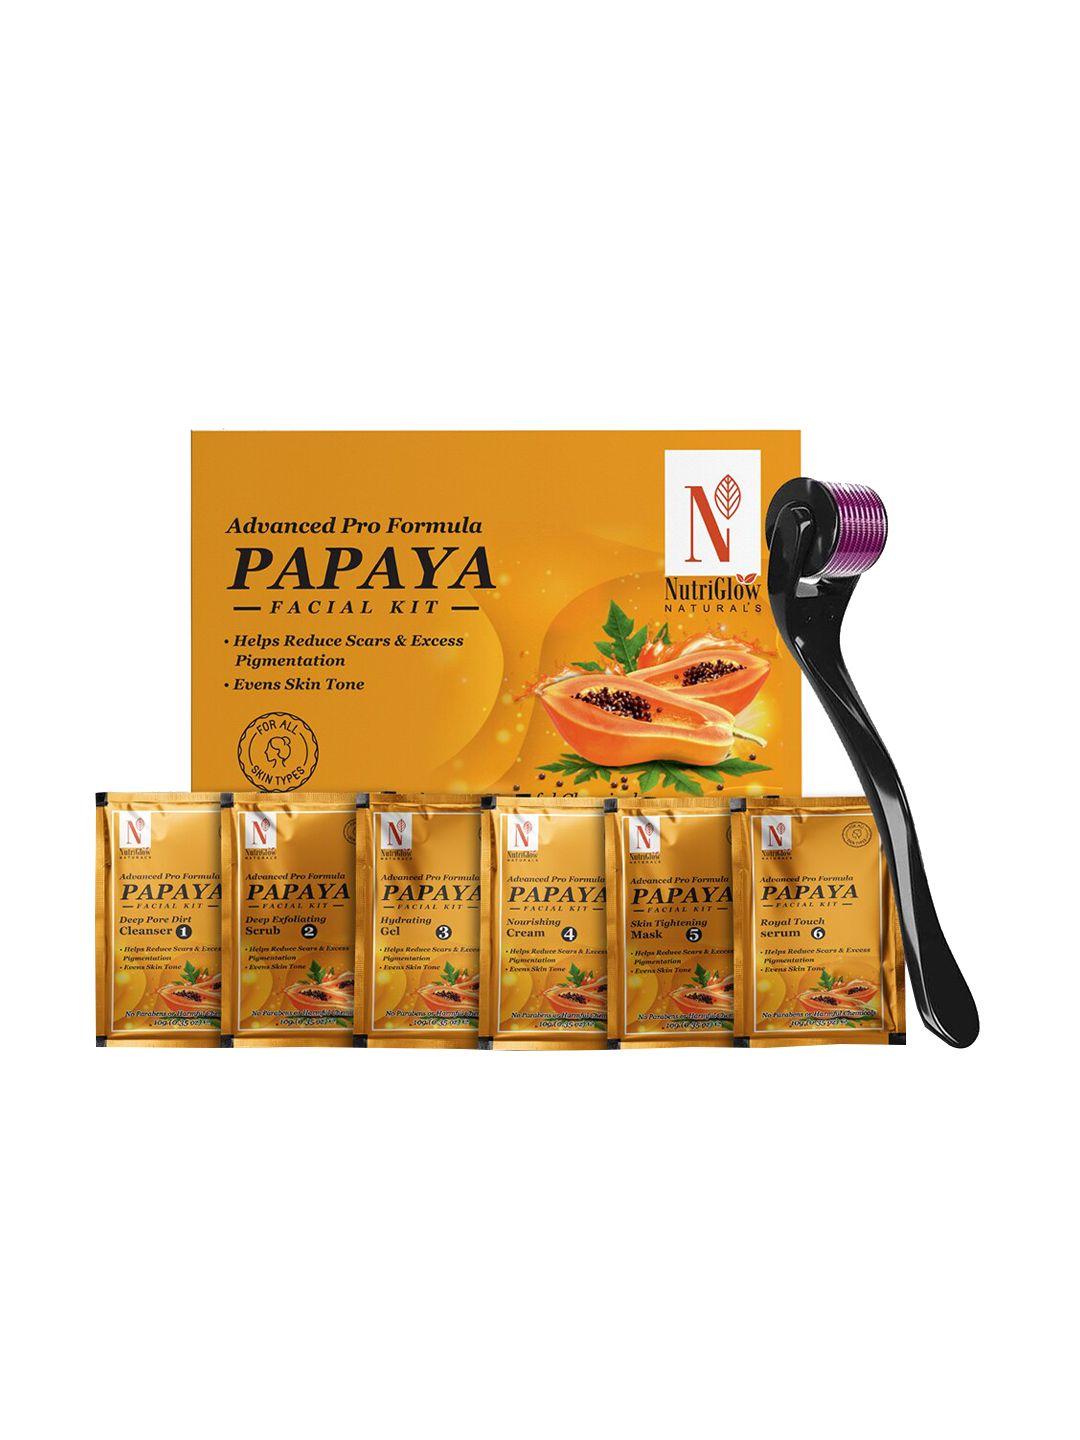 nutriglow naturals advanced pro formula unisex papaya facial kit 60g with derma roller